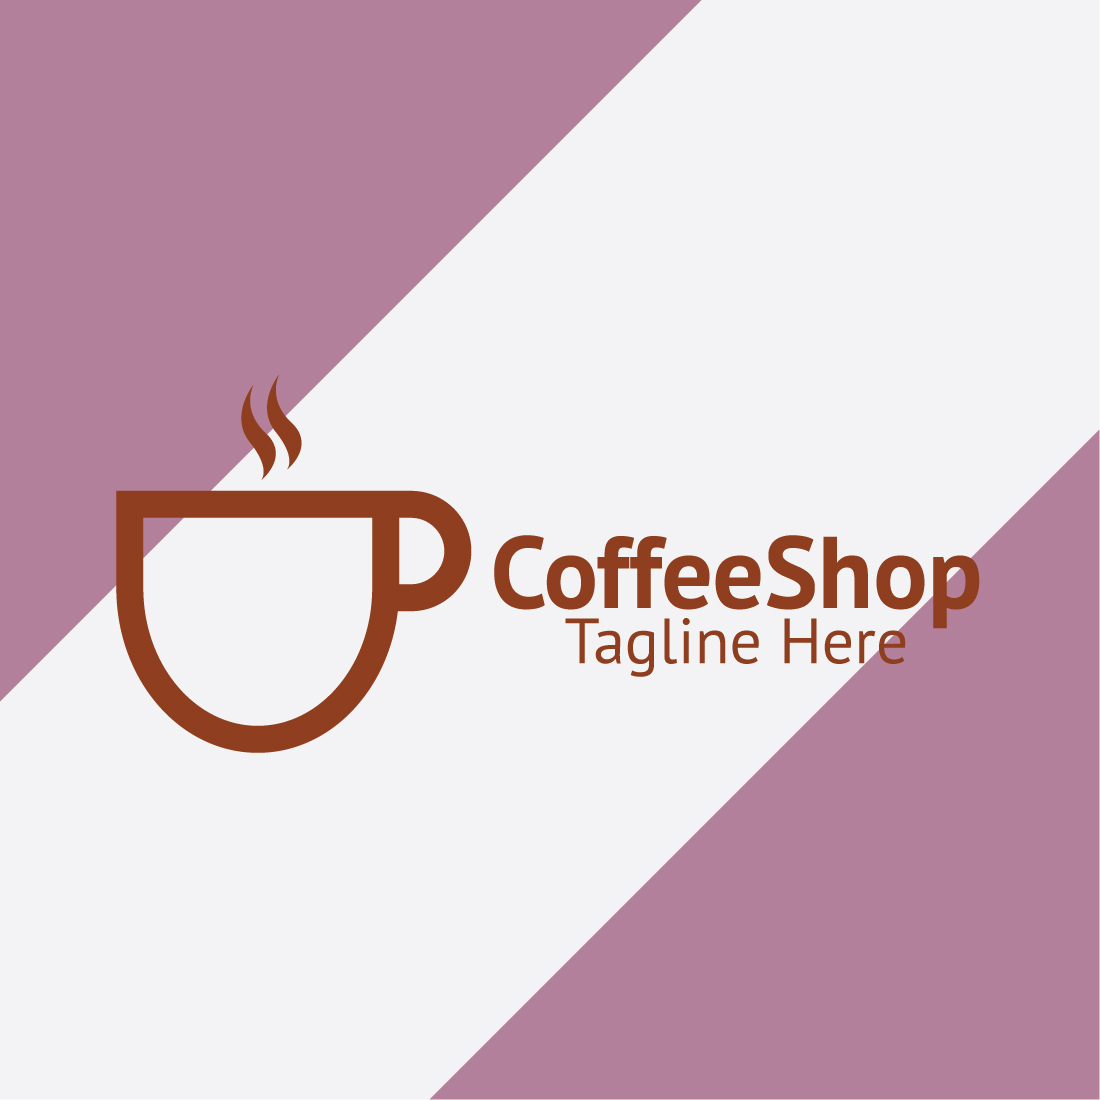 Professional Coffee logo & Coffee Shop logo design cover image.